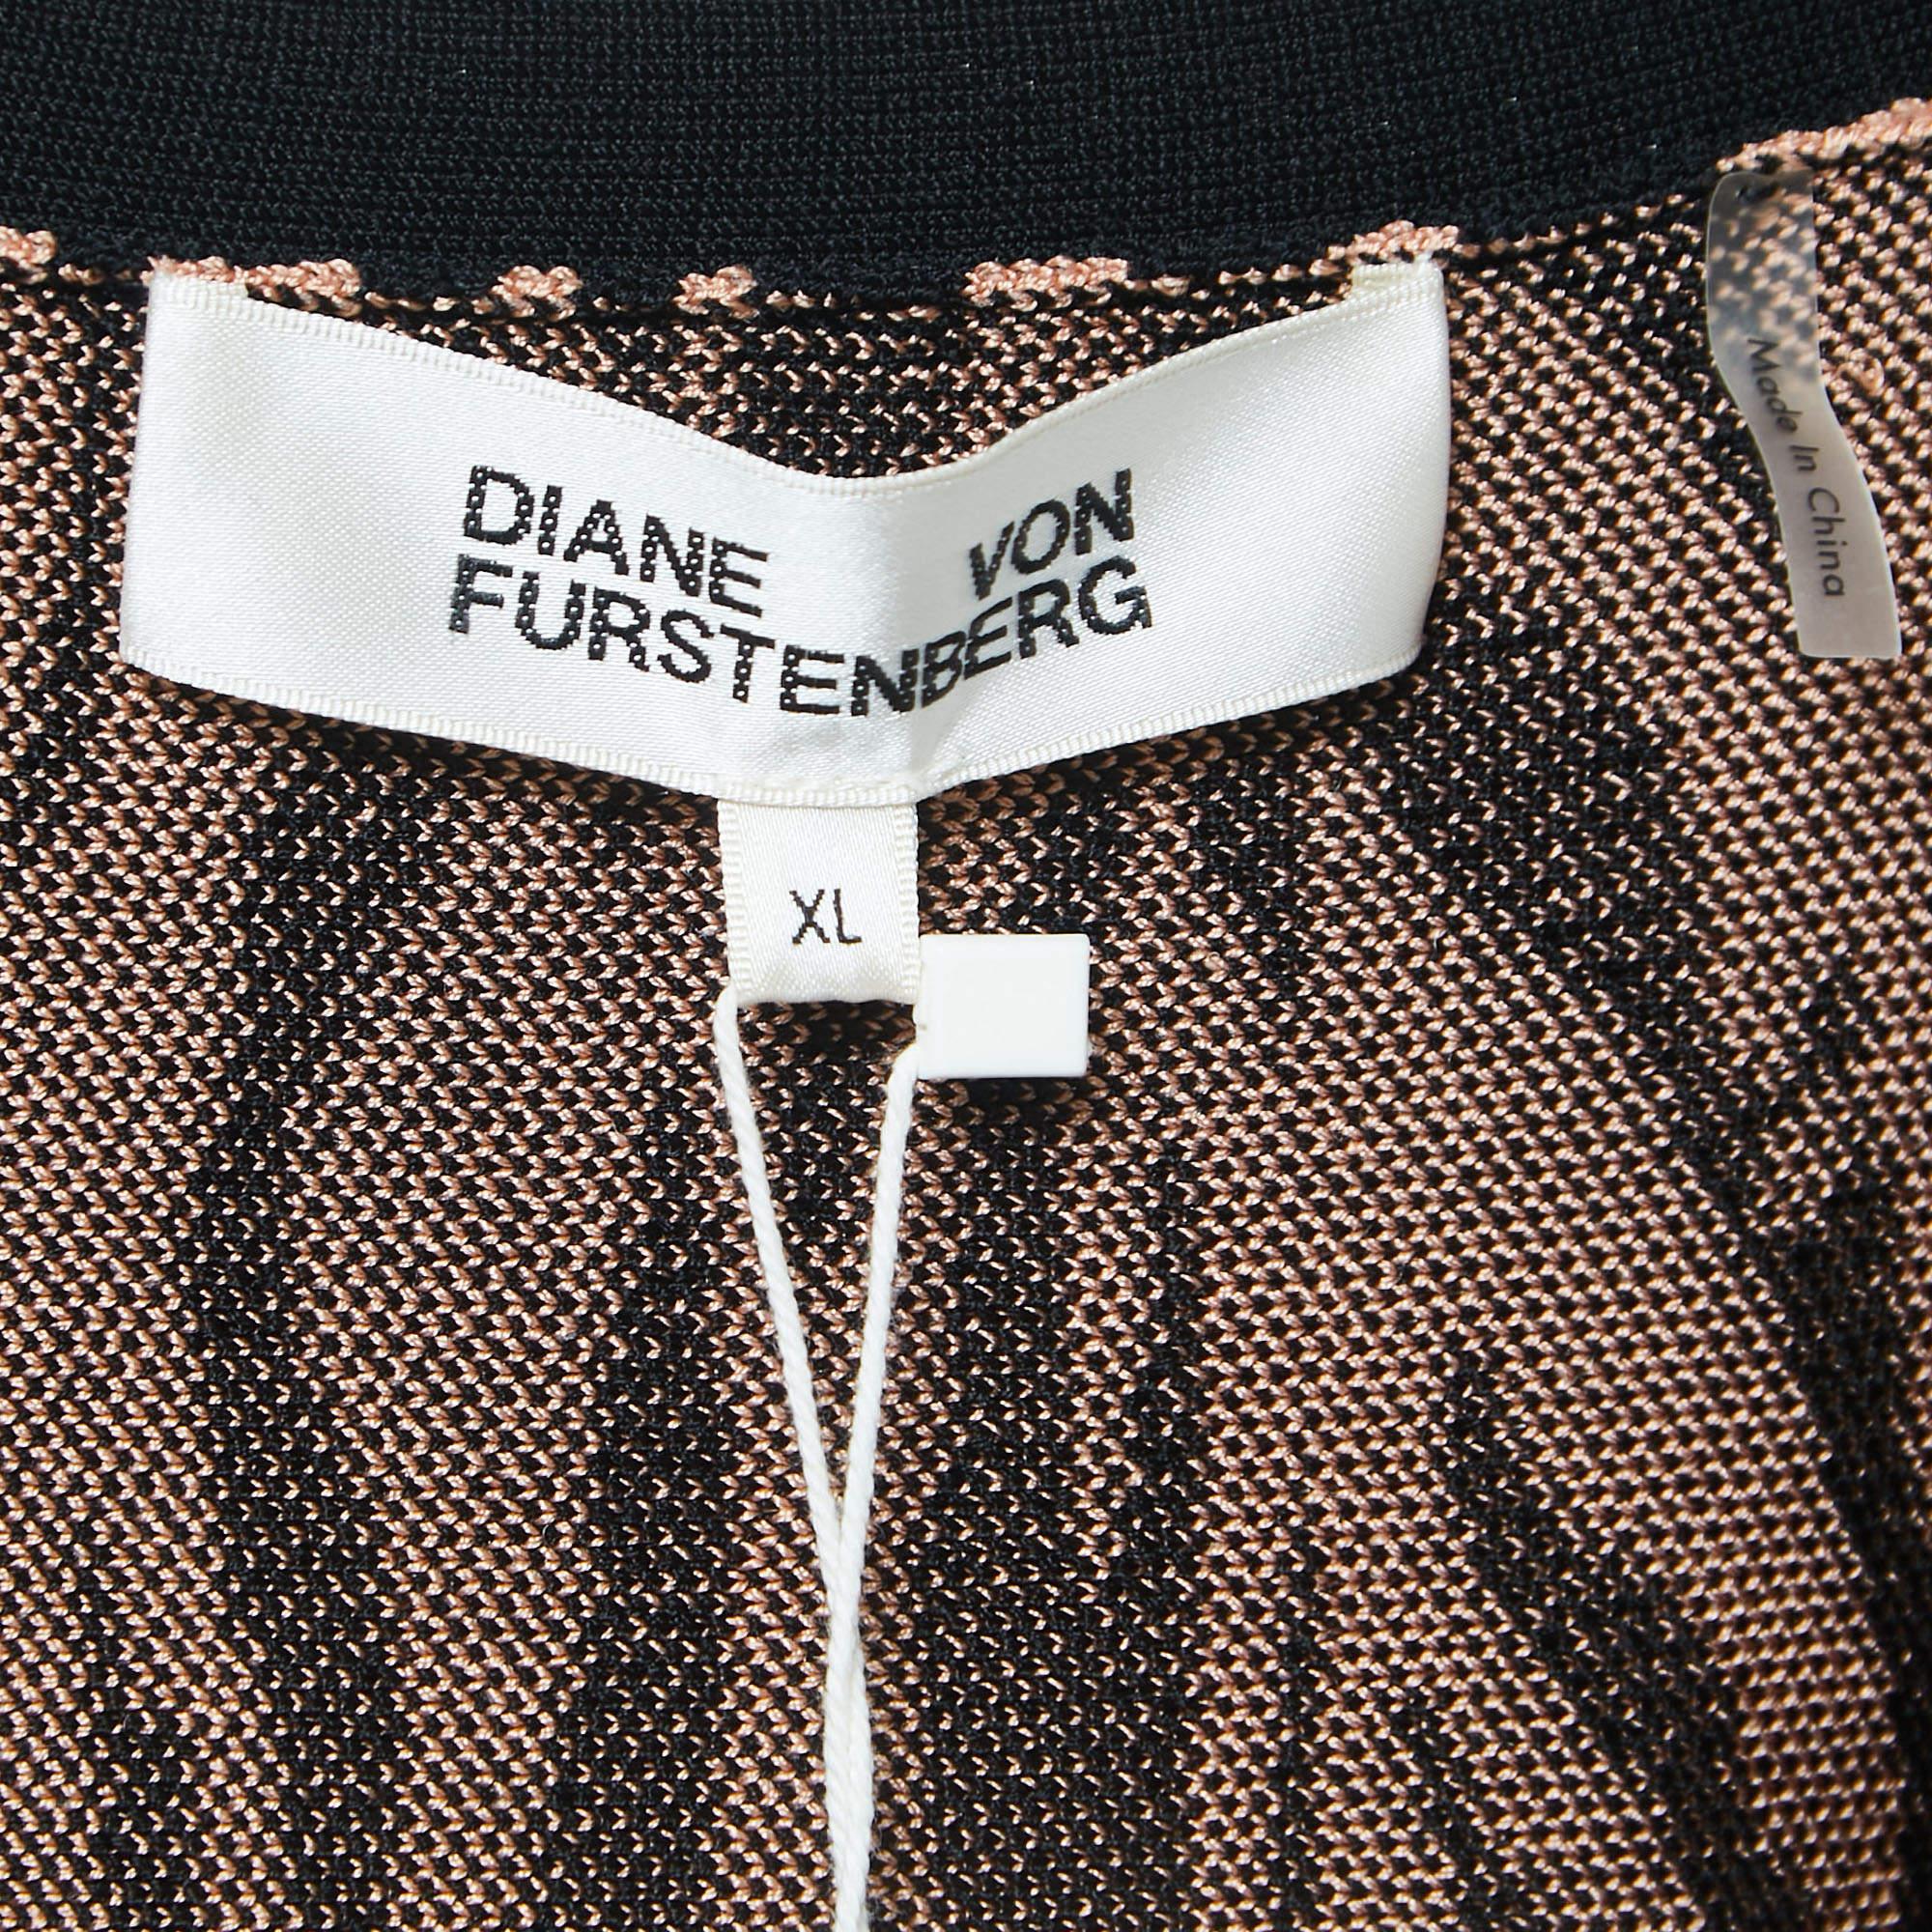 Diane Von Furstenberg Pink/Black Tiger Striped Knit Cardigan XL For Sale 1